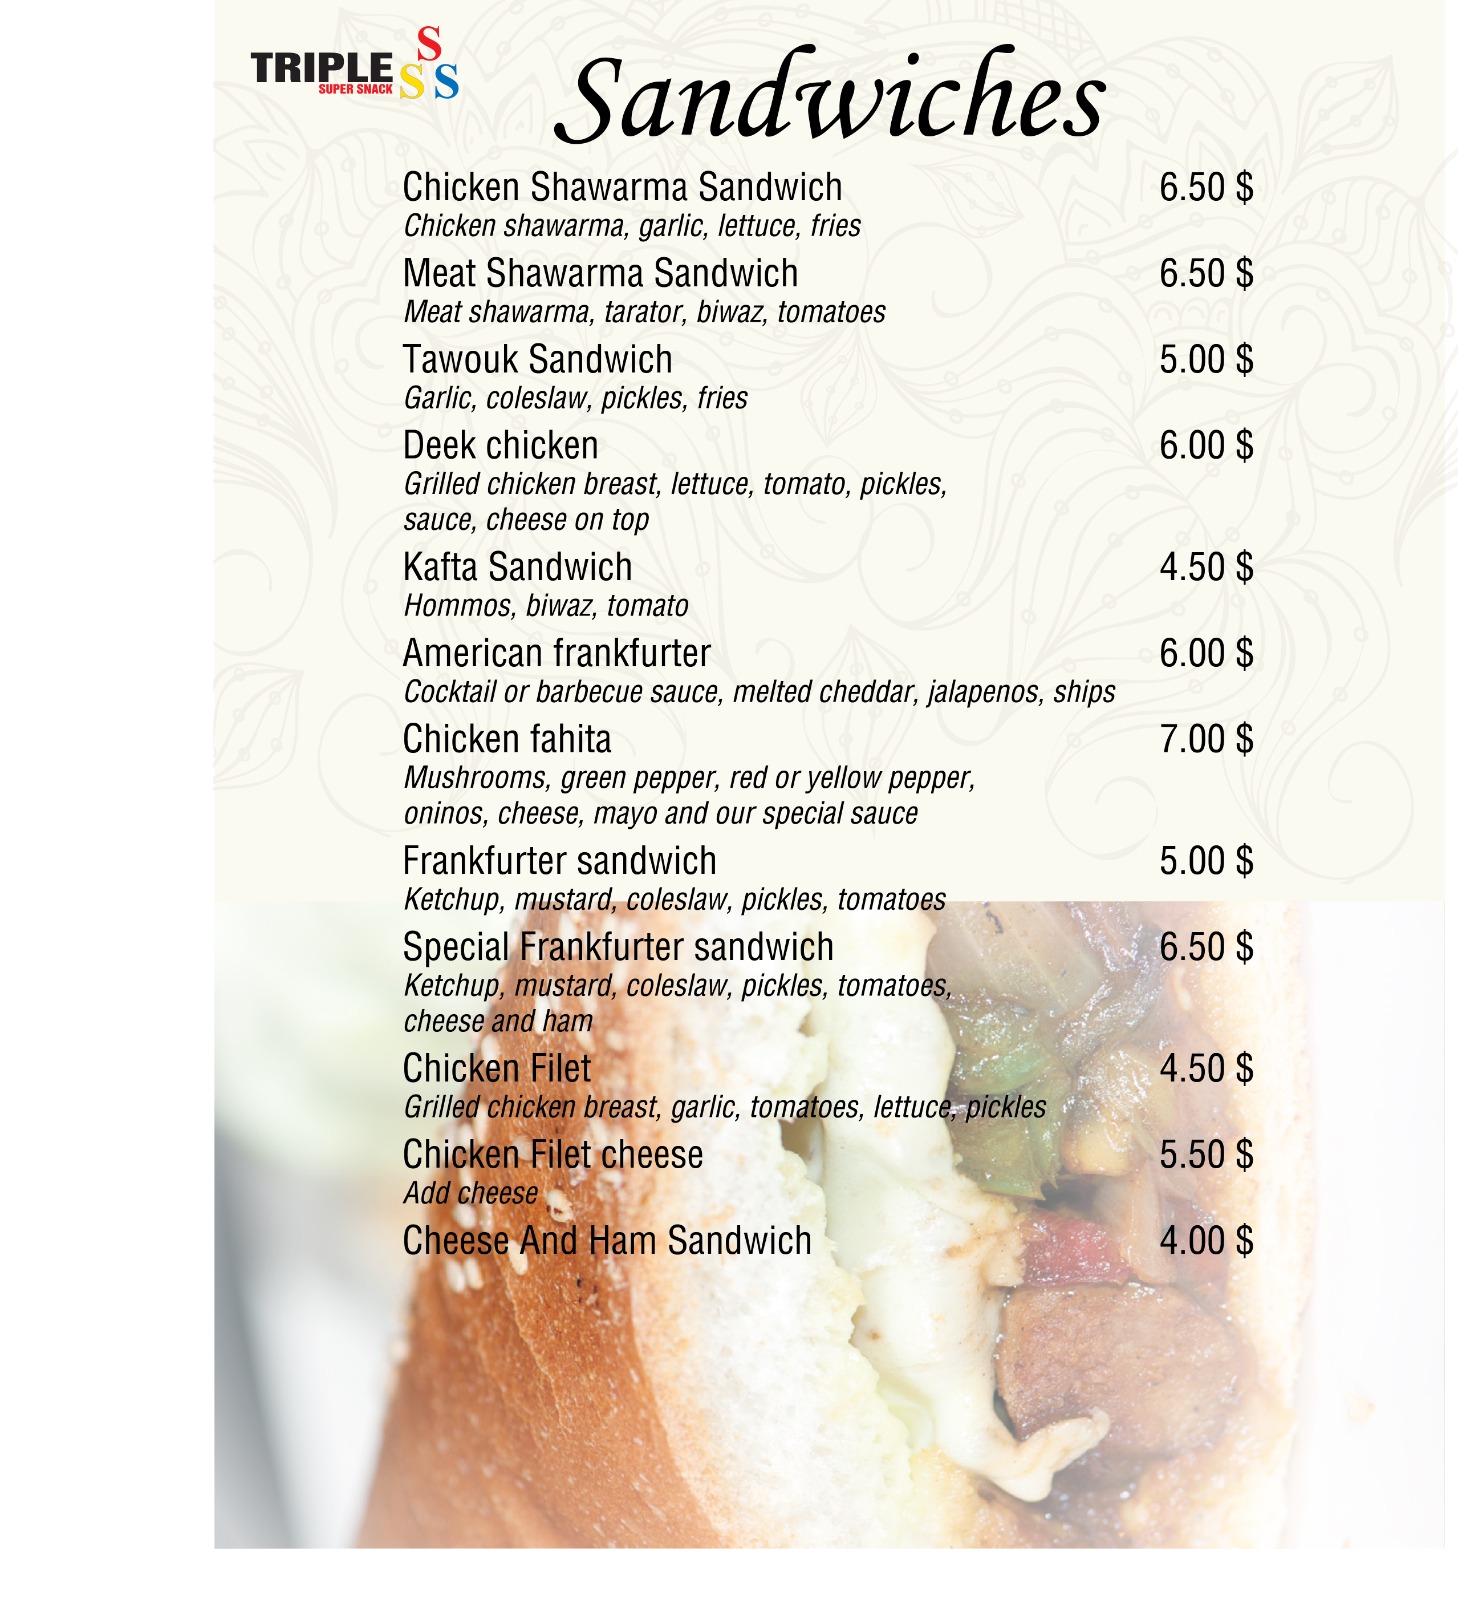 sandwiches_image